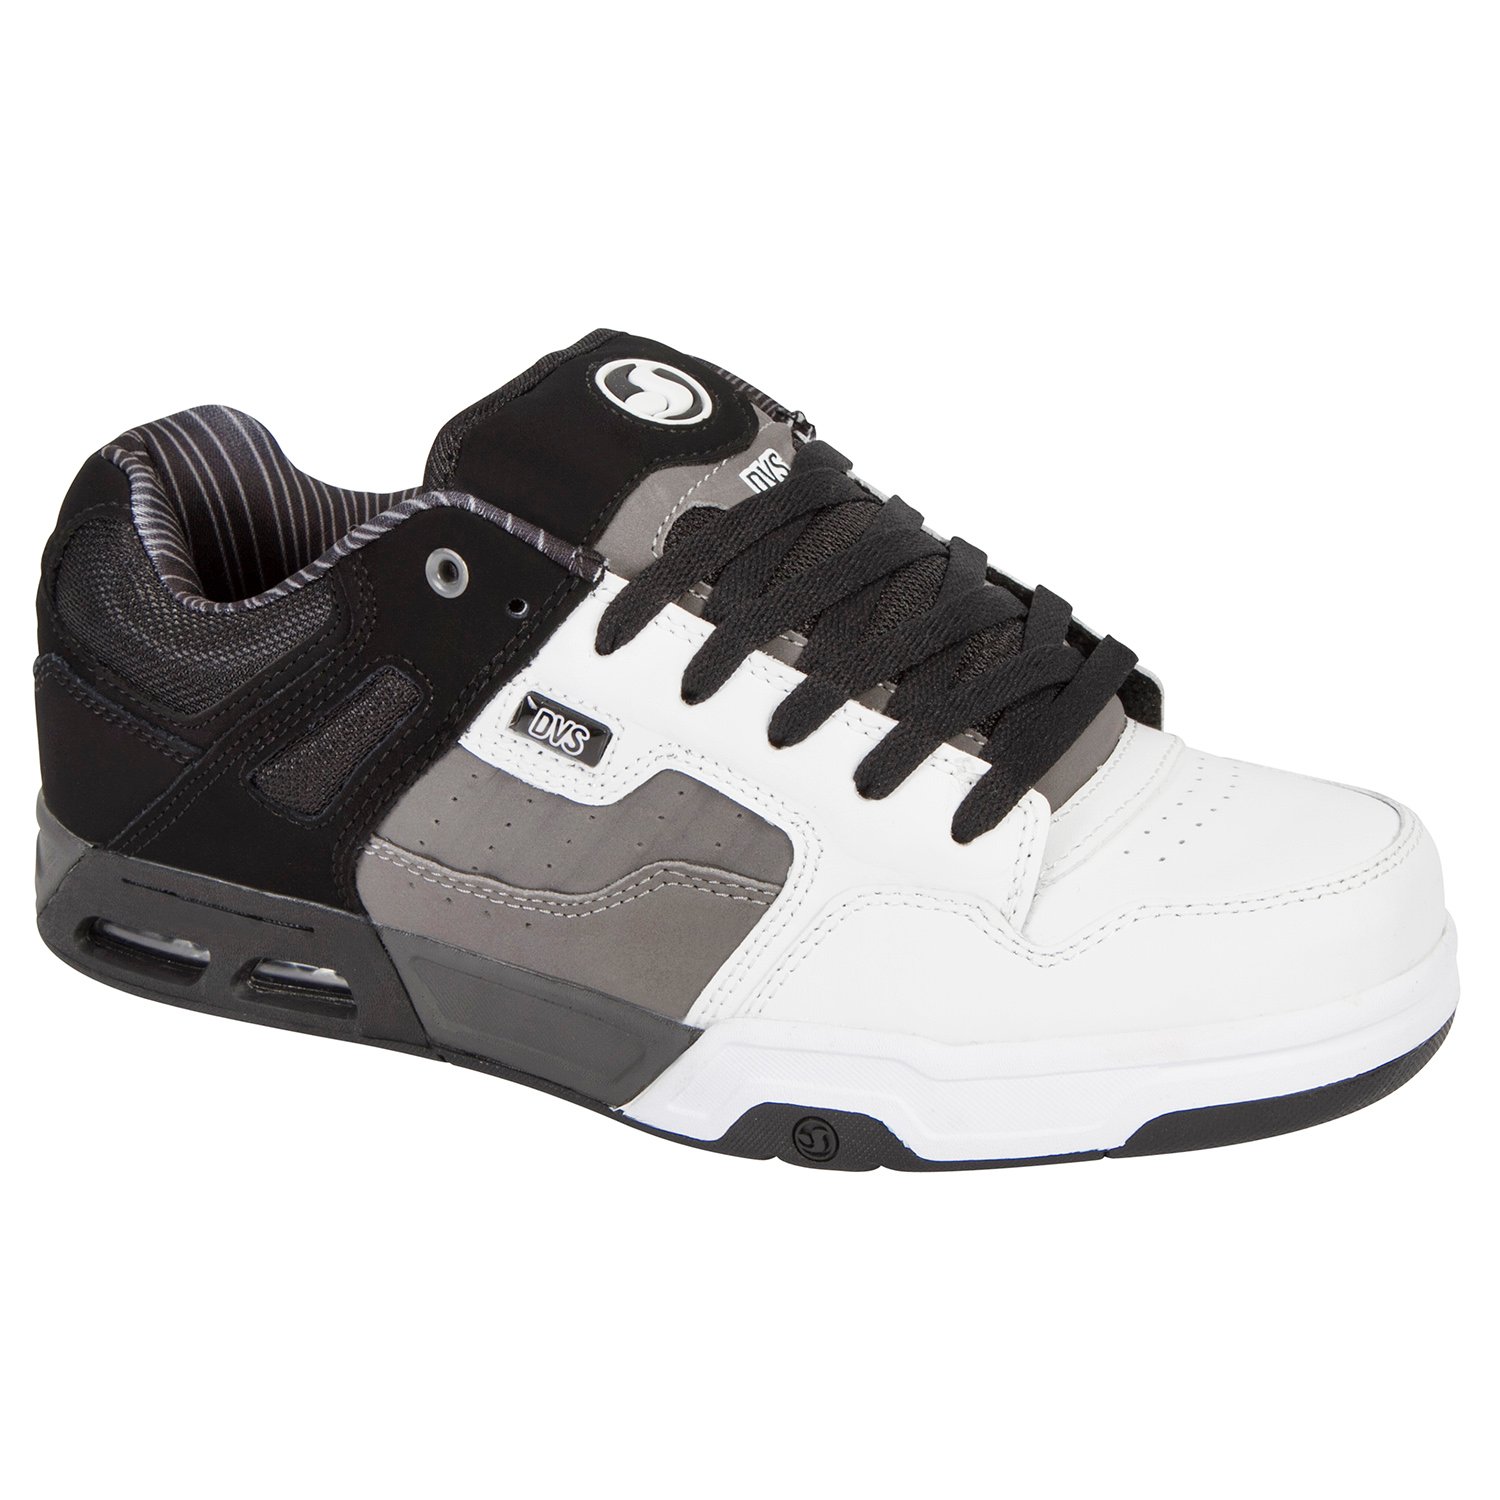 DVS Shoes Enduro Heir Black/Charcoal/White/Leather Nubuck